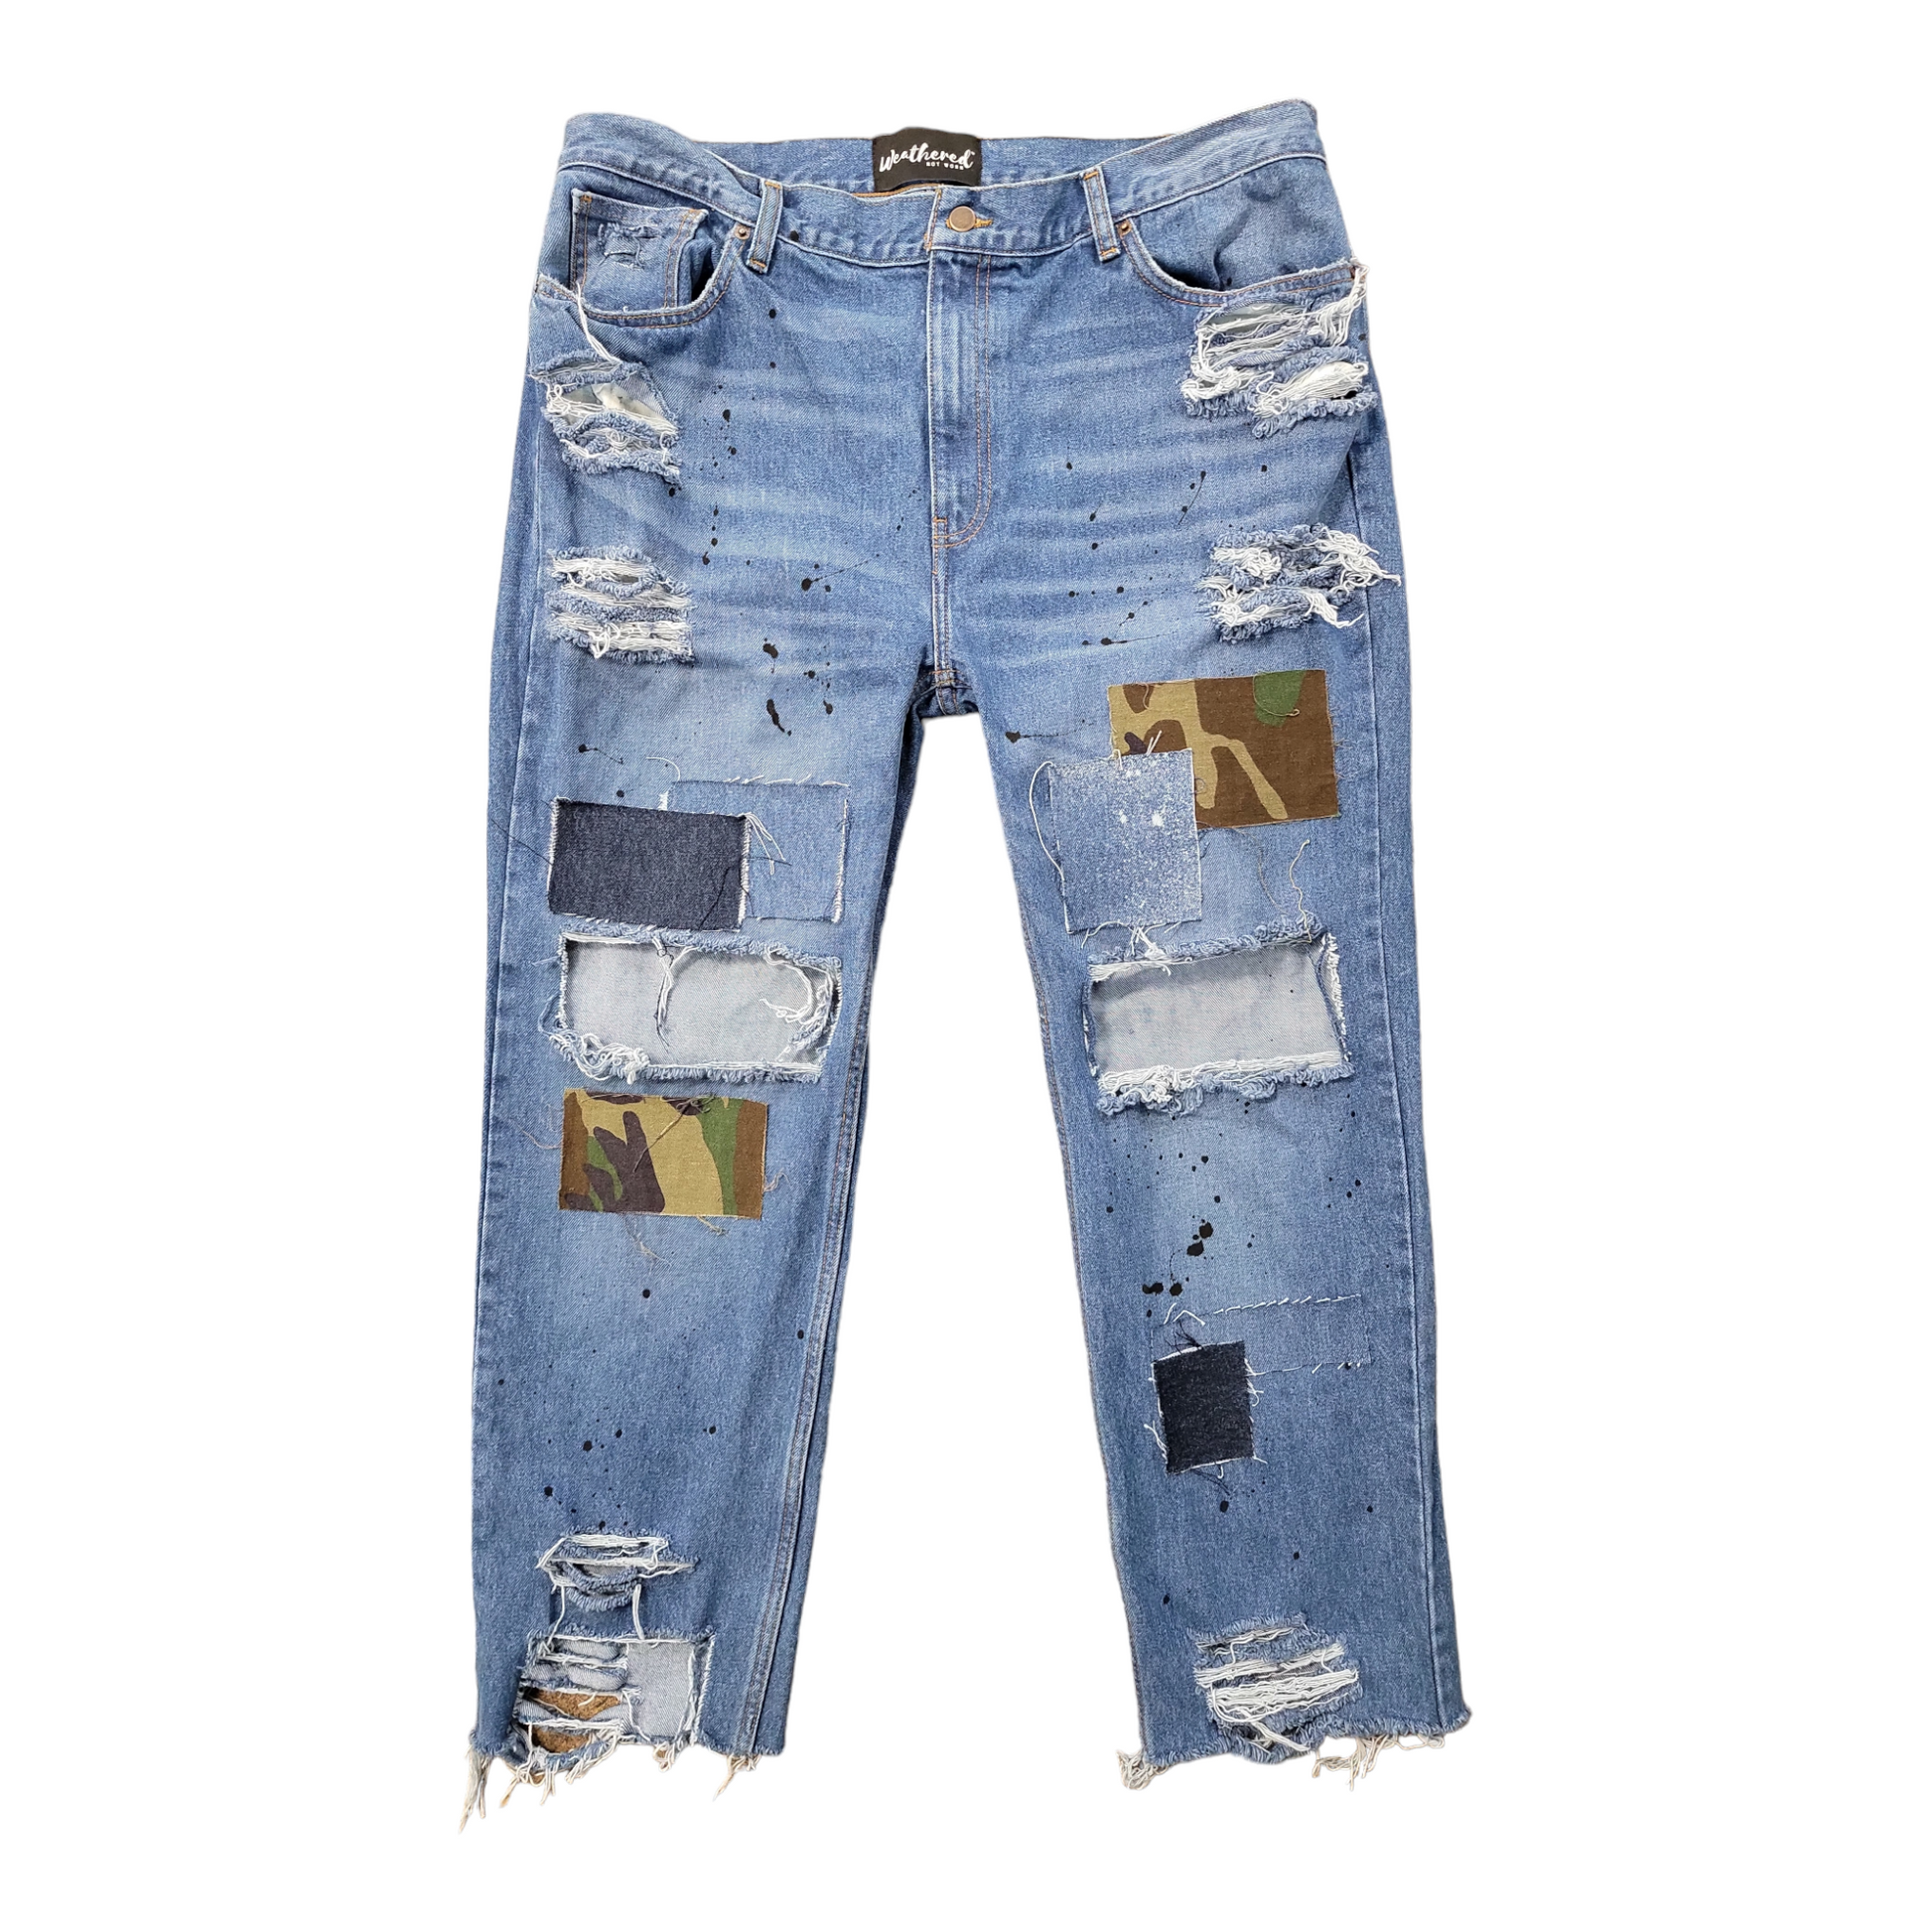 Vintage Ozoc Jeans New York Men's 5 Pocket Patchwork Denim Jeans Size 34x33